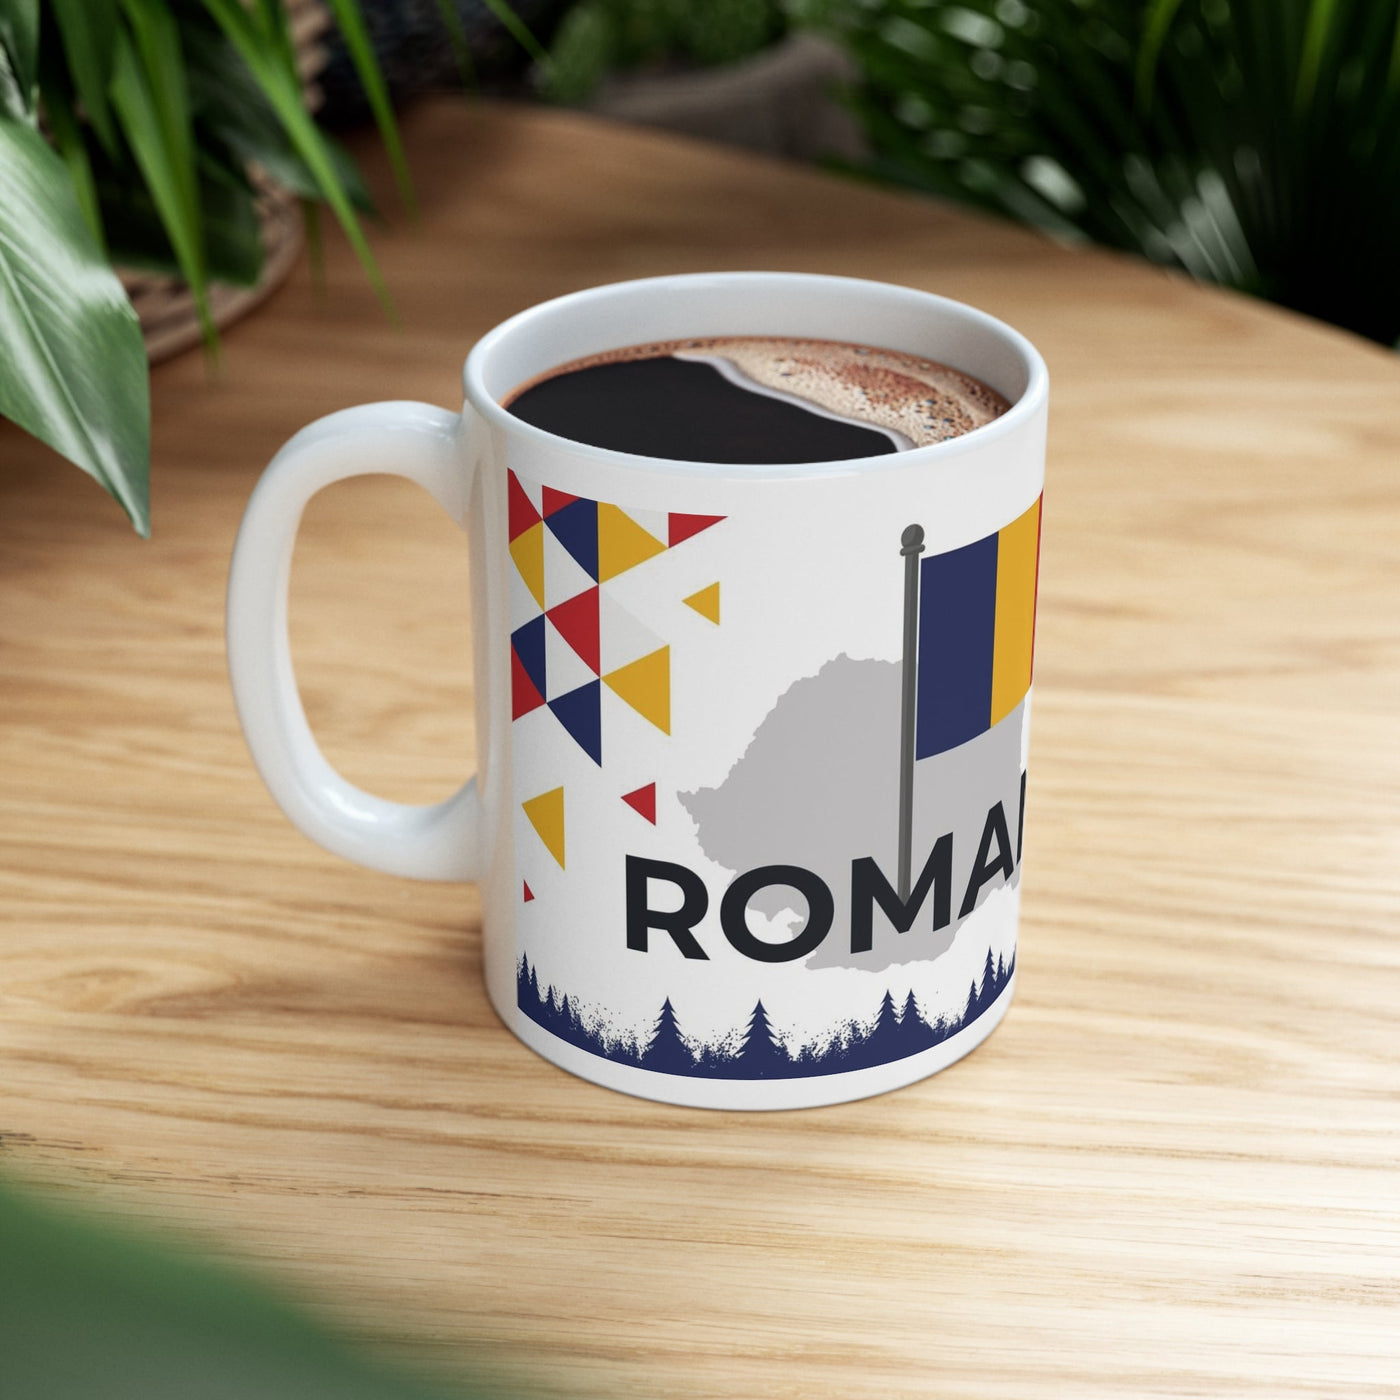 Romania Coffee Mug - Ezra's Clothing